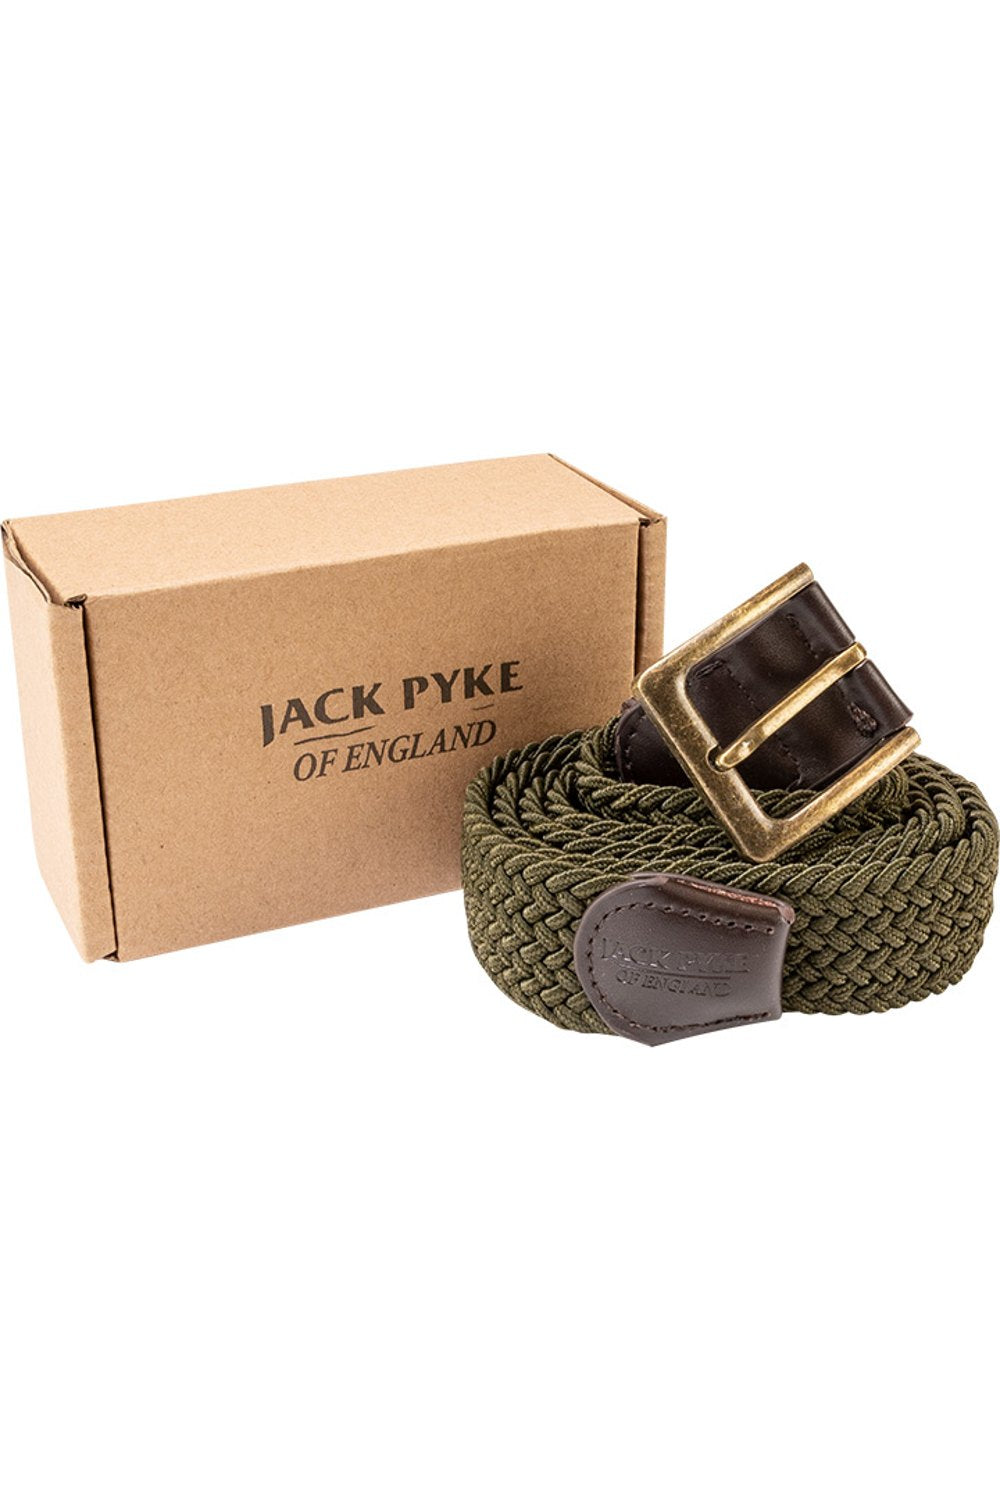 Jack Pyke Countryman Elasticated Belt in Green with a presentation box  